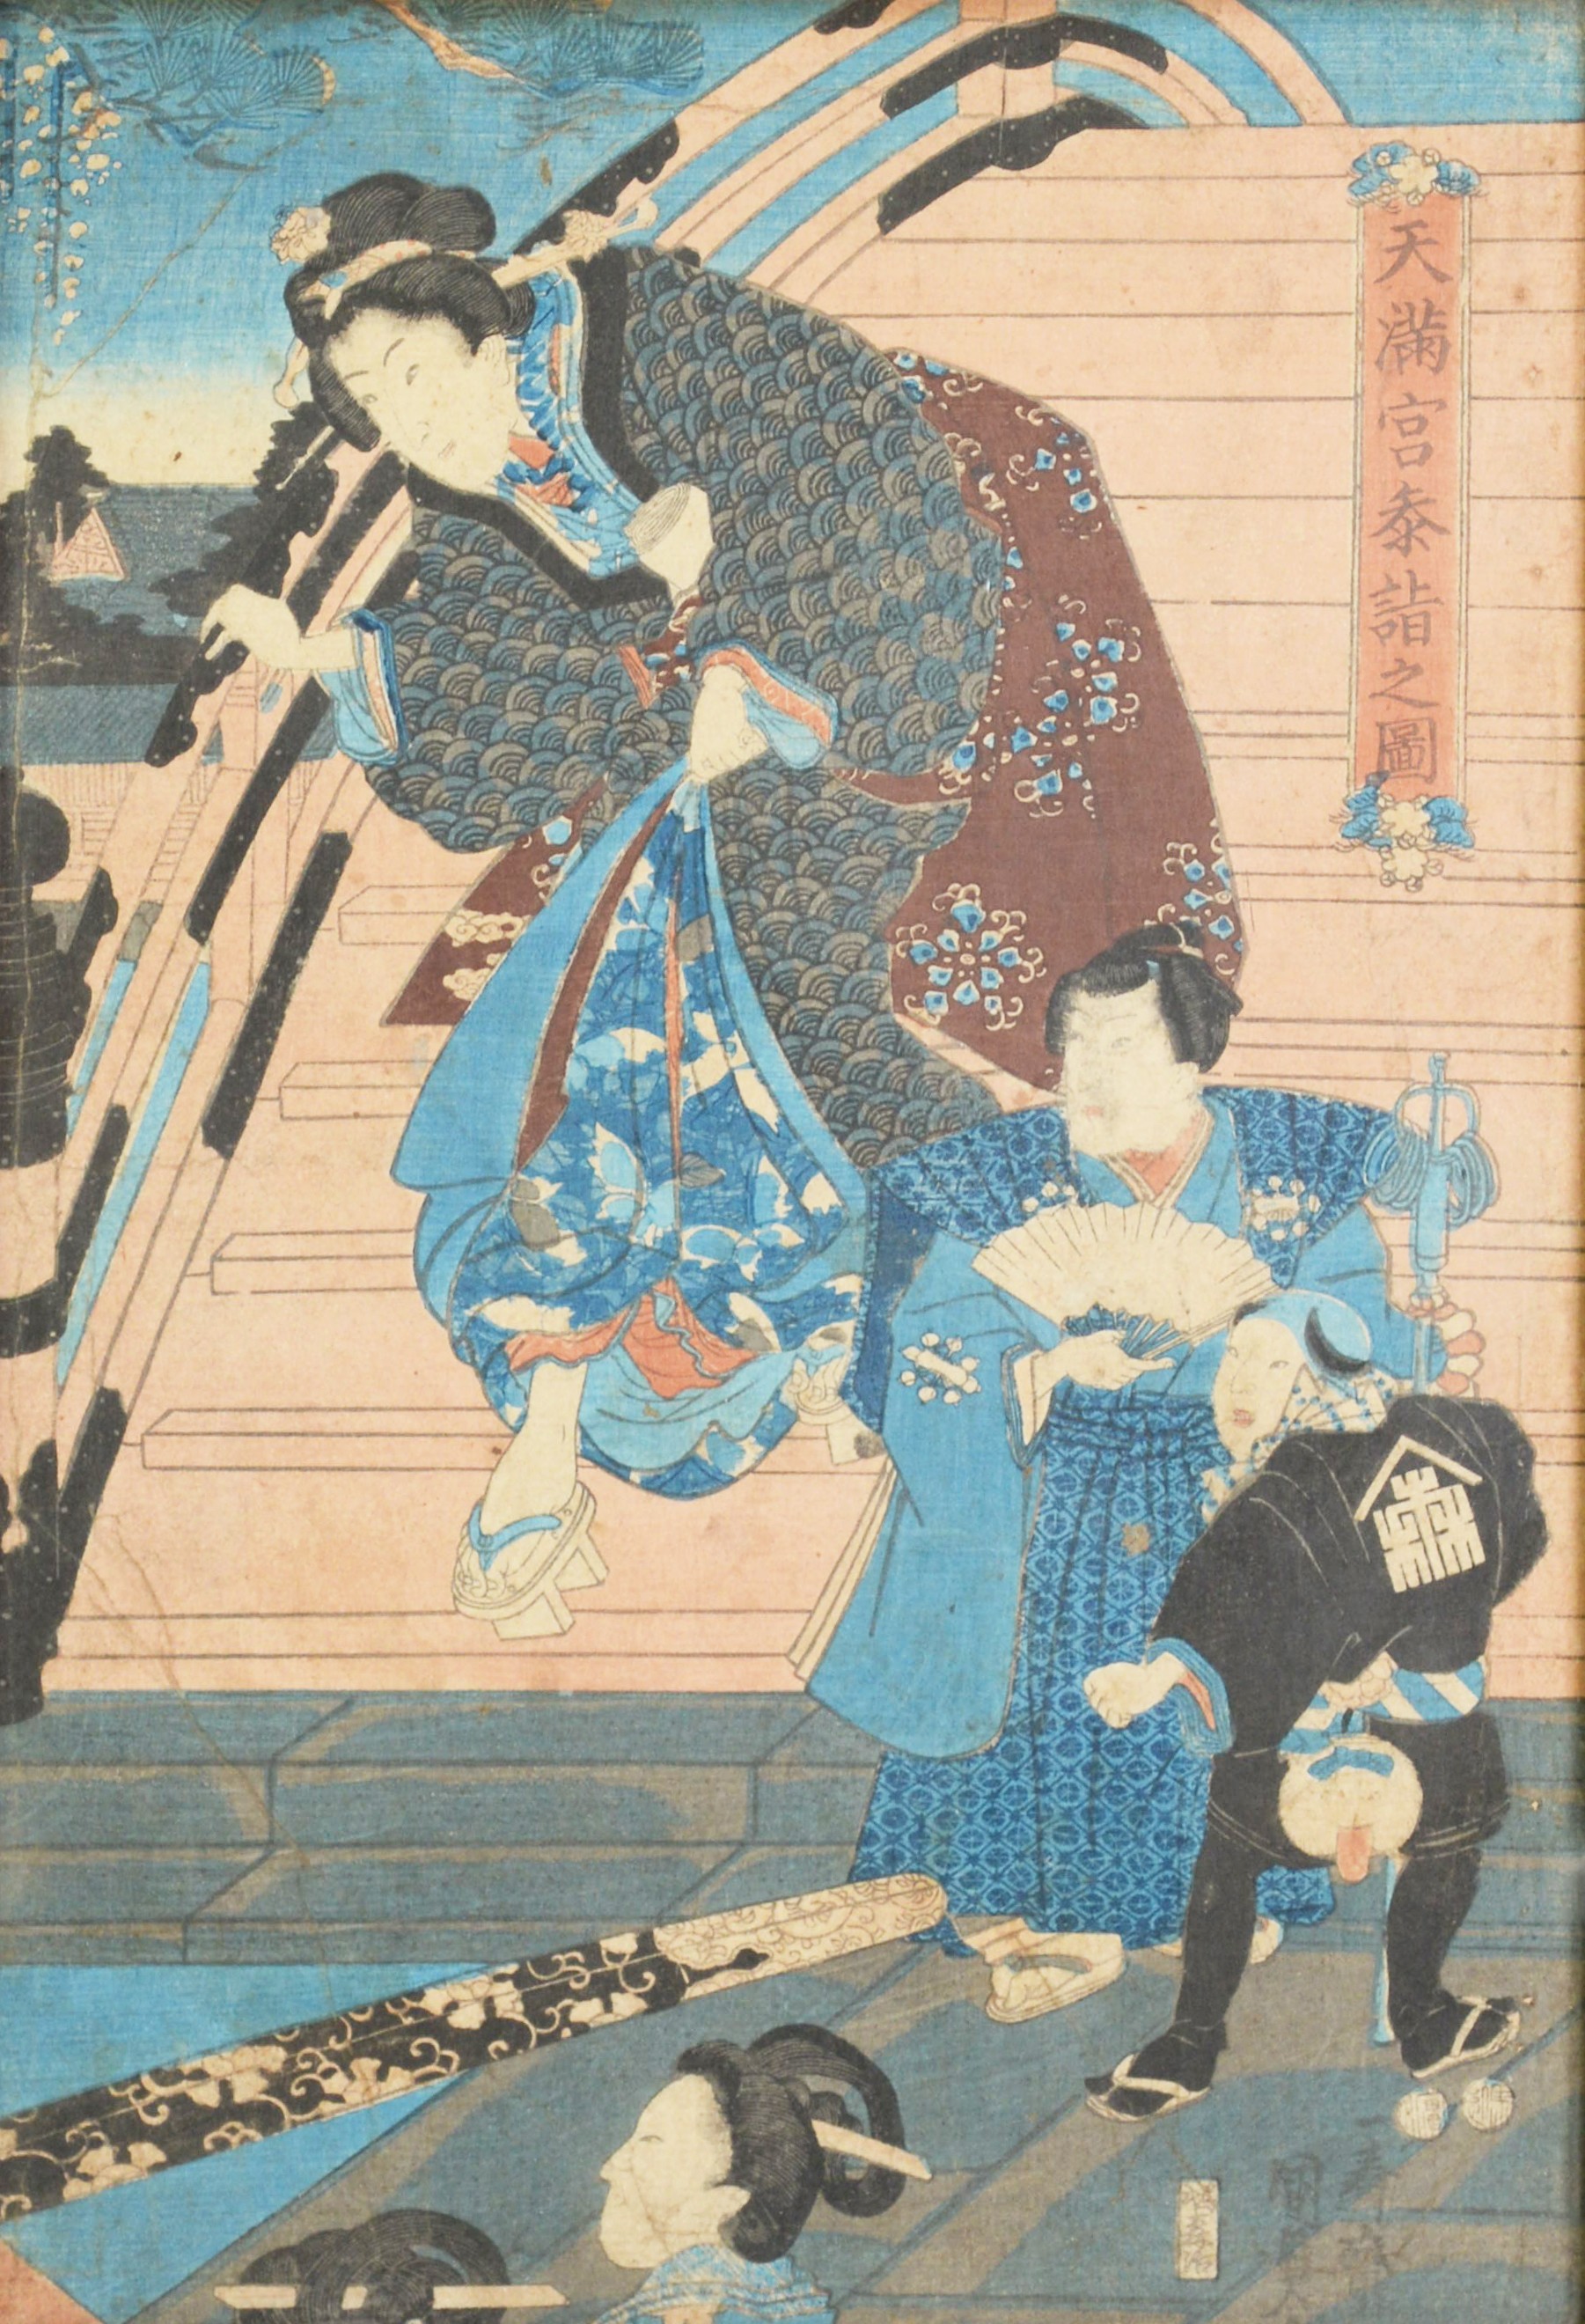 EDO JAPANESE UKIYO-E WOODBLOCK PRINT, featuring a Kabuki player descending stairs to three other